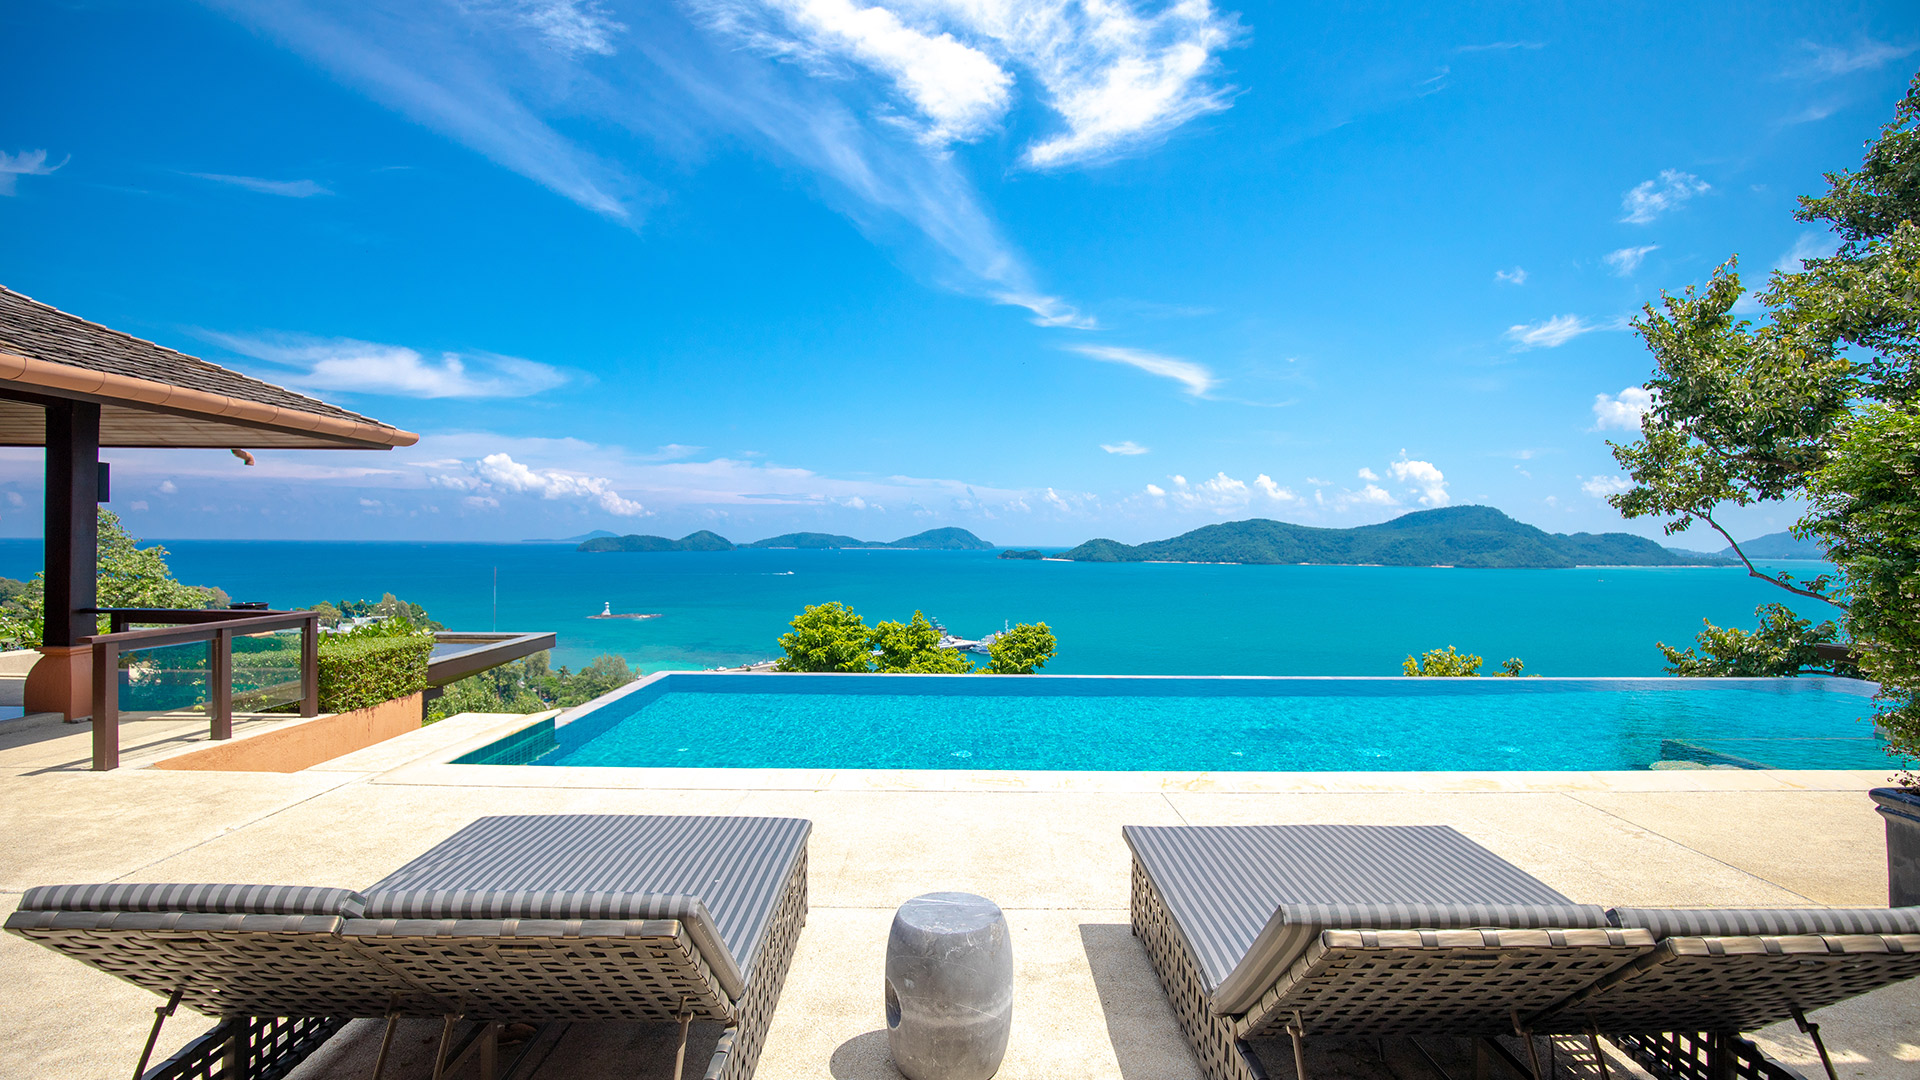 6 star hotel in phuket residence villa luxury five bedroom island view sunset